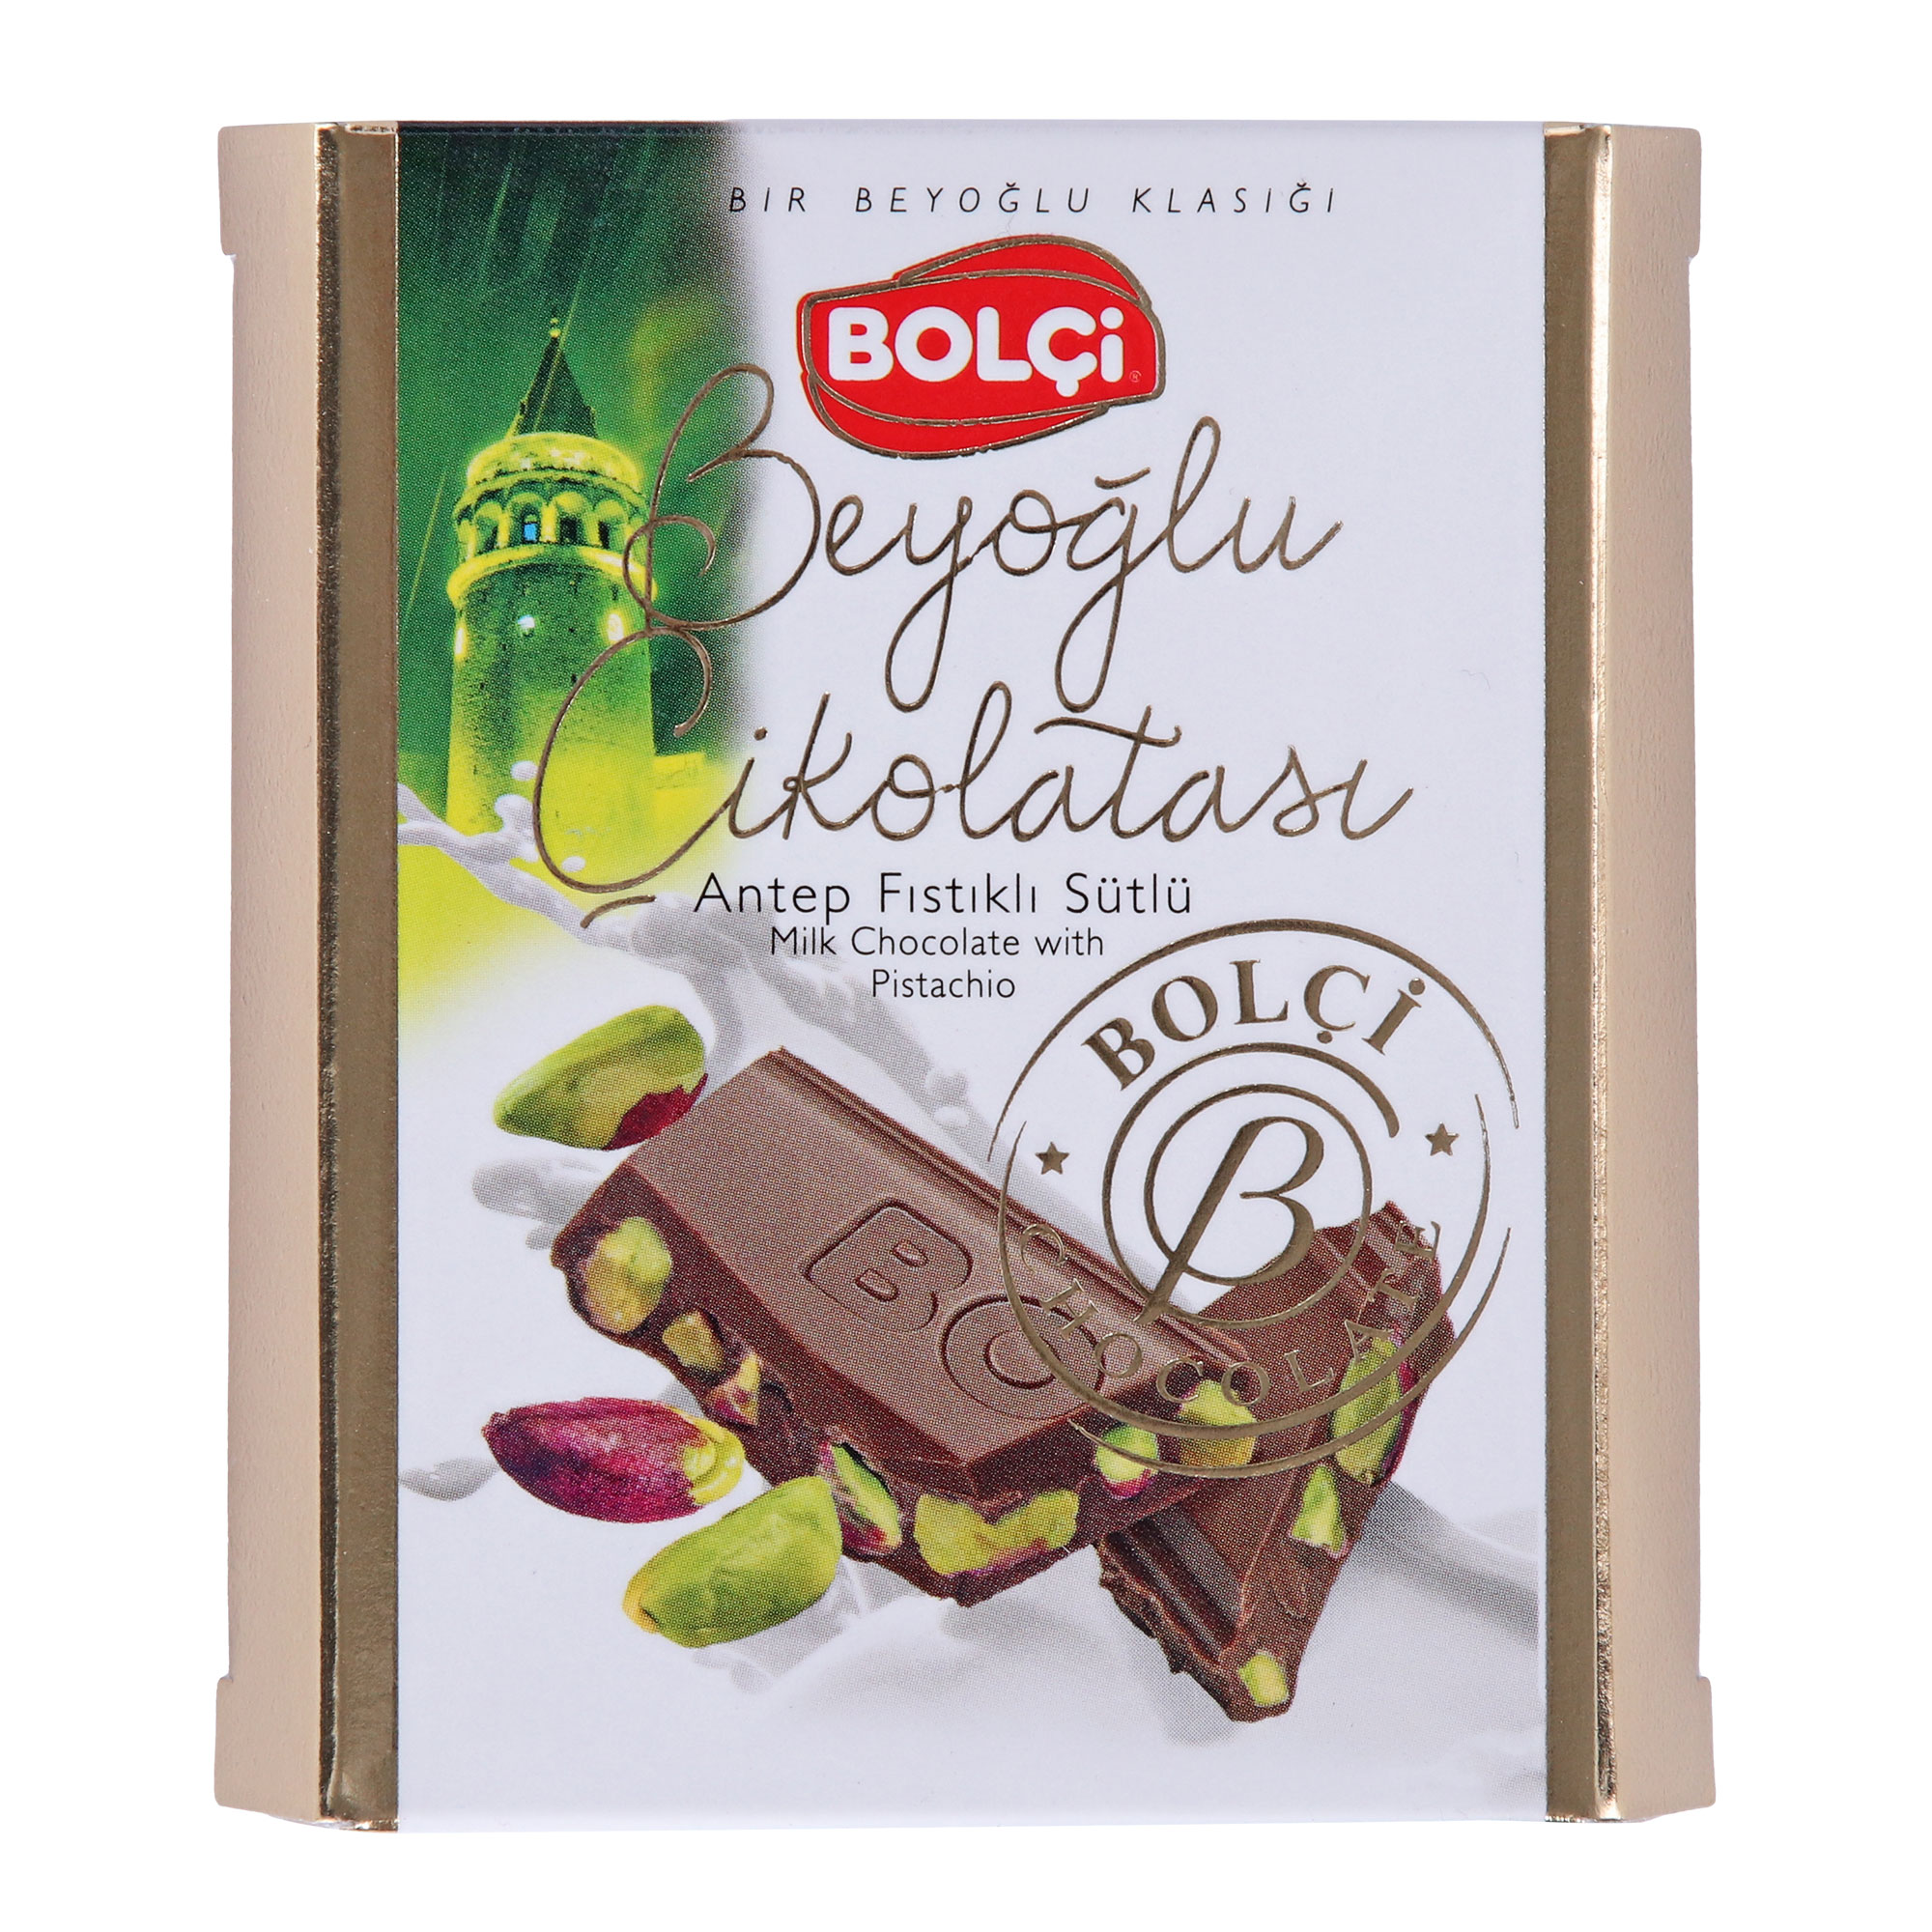 Молочный шоколад Bolci с цельной фисташкой, 60 г шоколад rioba молочный 32% какао 100 гр